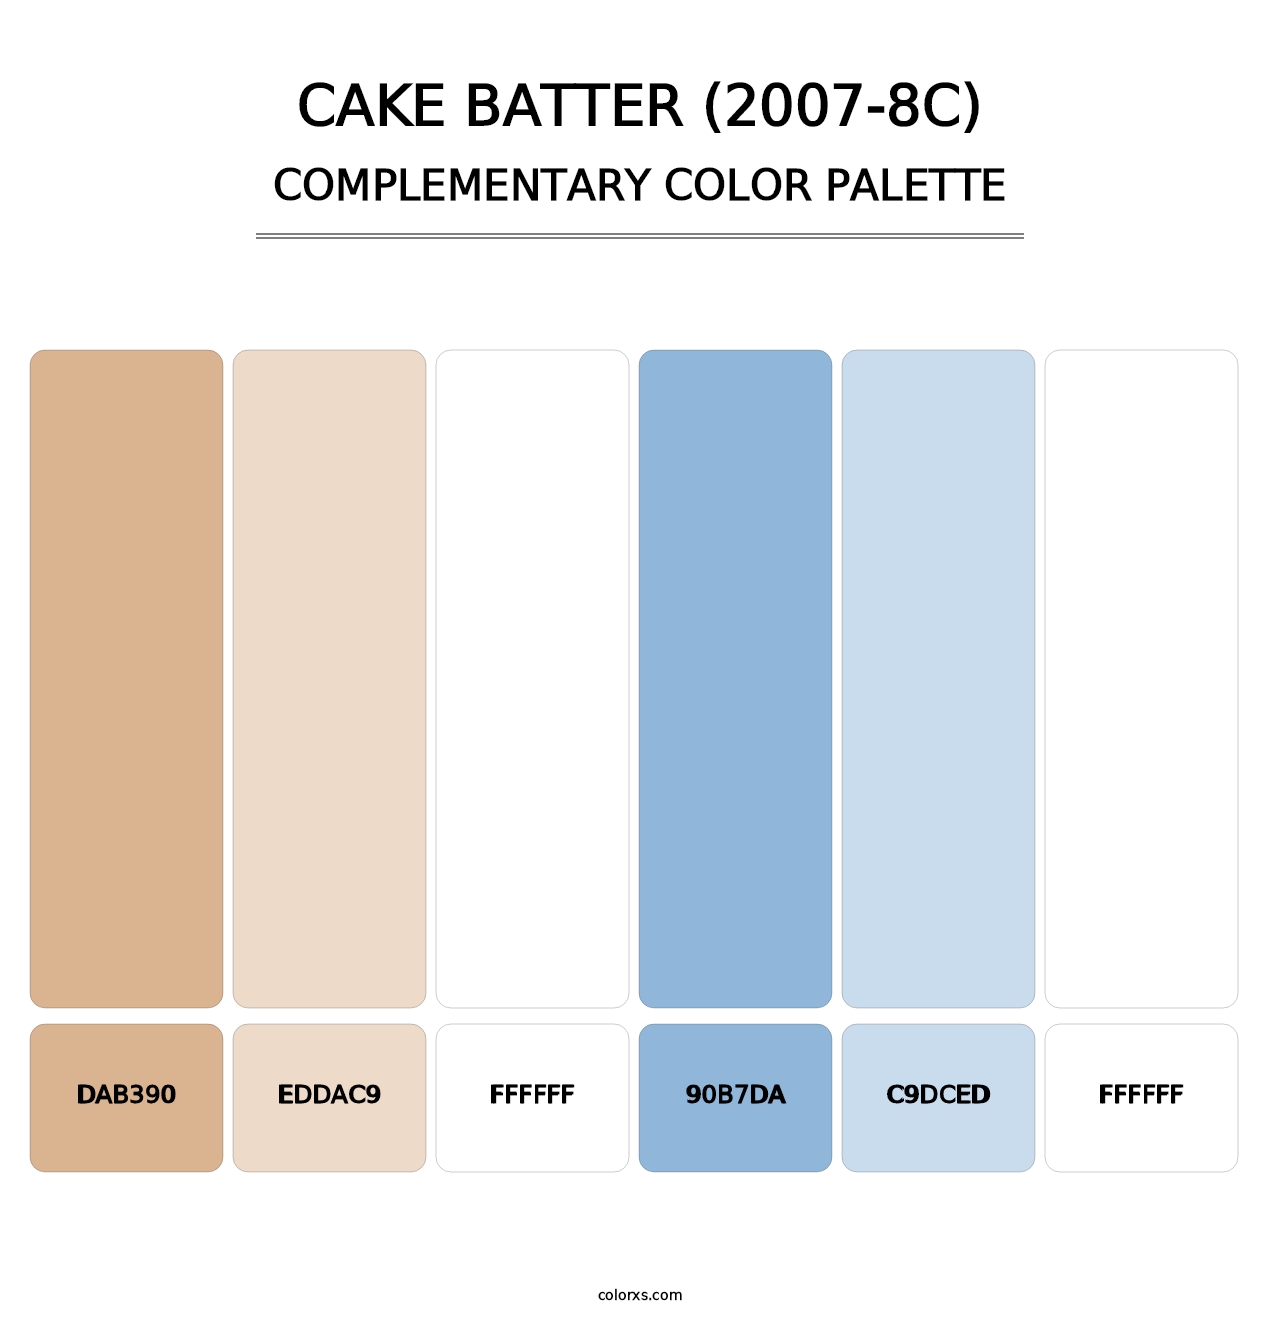 Cake Batter (2007-8C) - Complementary Color Palette